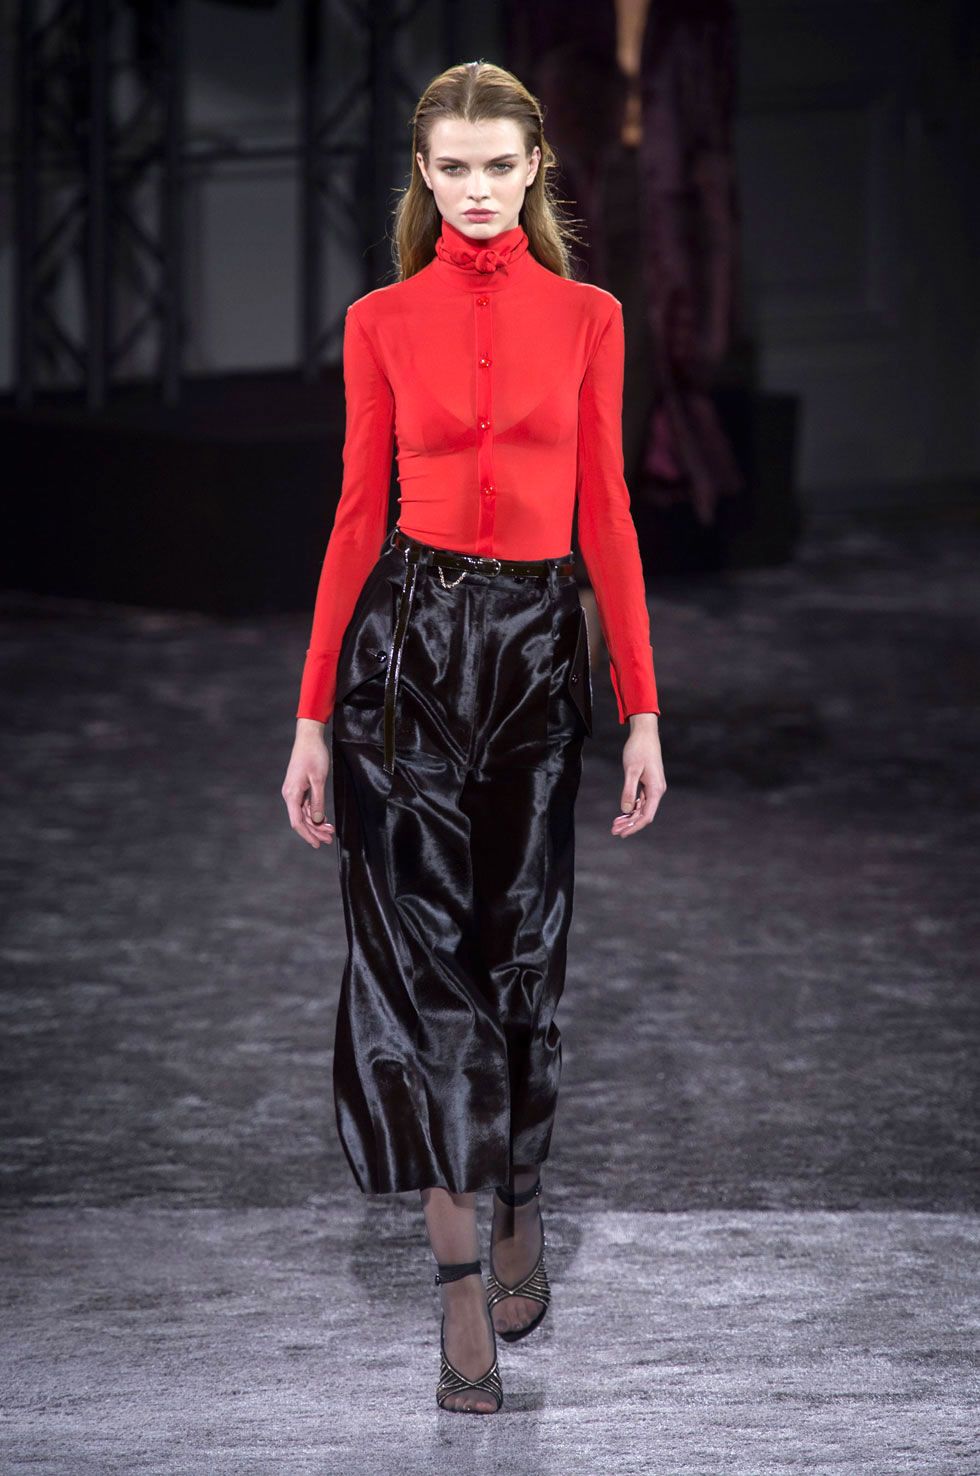 Women's dresses and skirts - Fashion - Nina Ricci